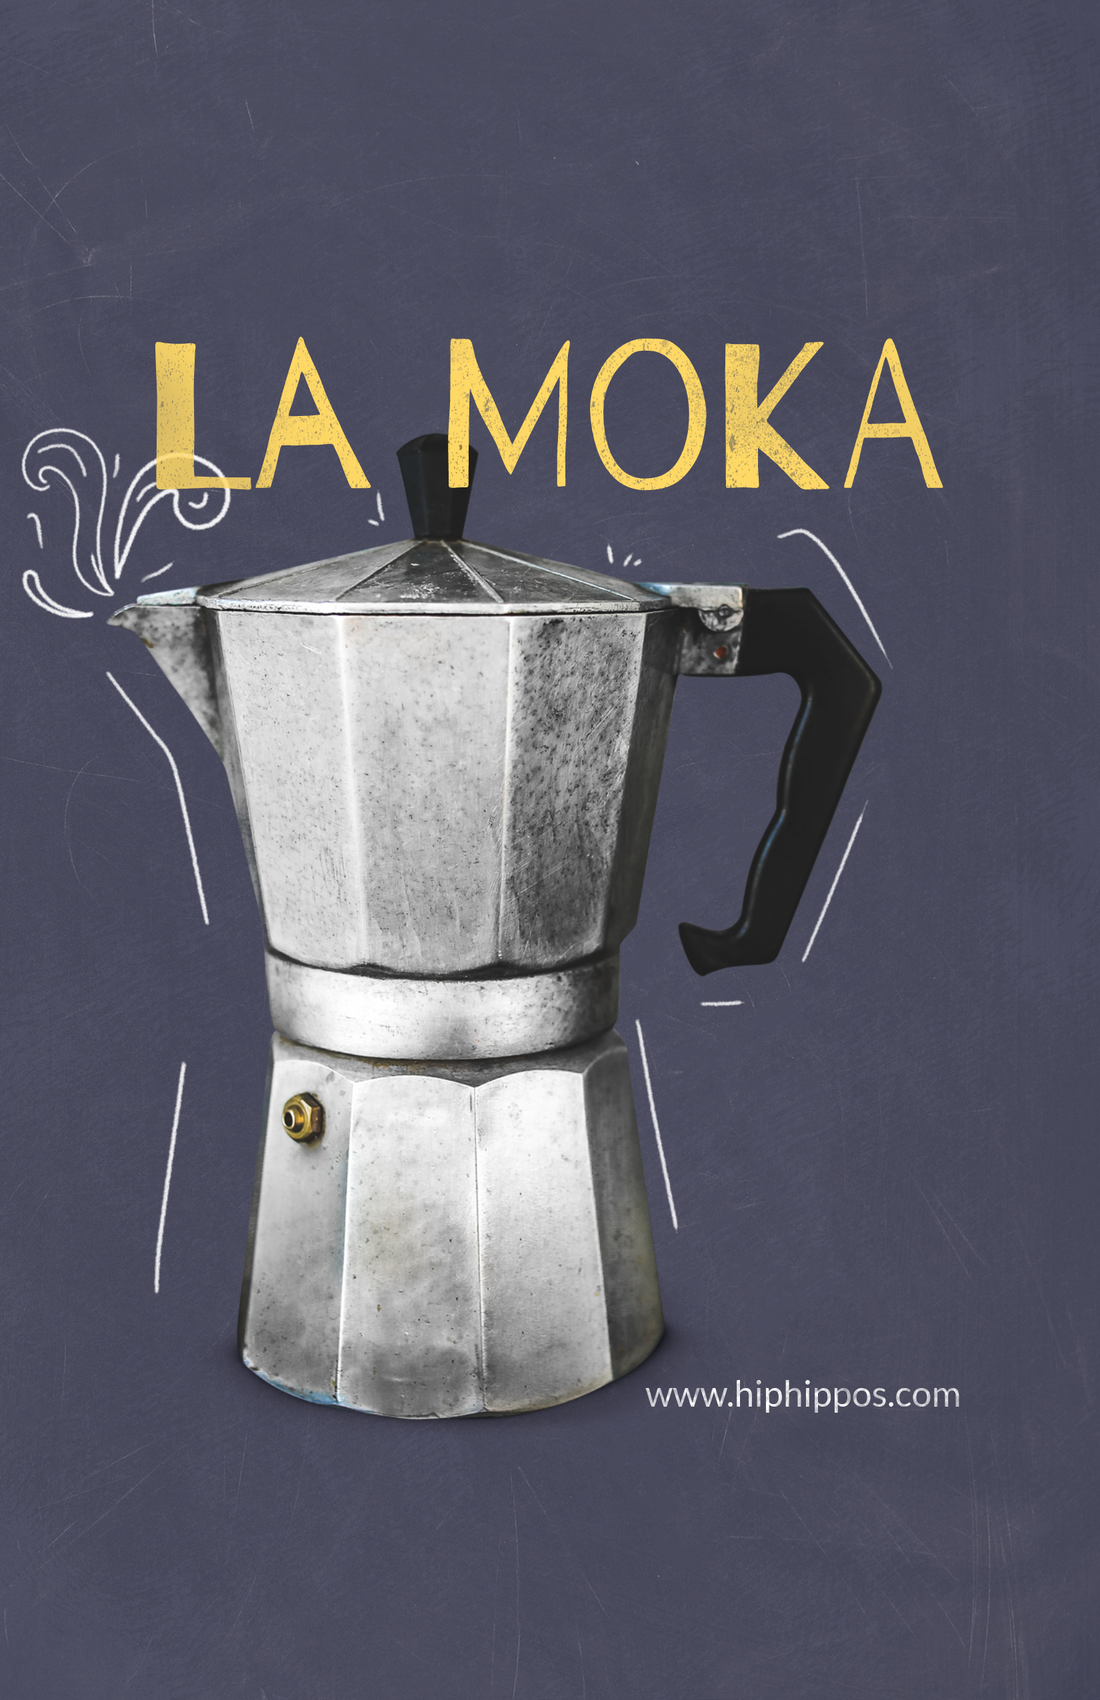 La moka, Italian coffee maker, delivered to your doorstep, drink coffee like an Italian 